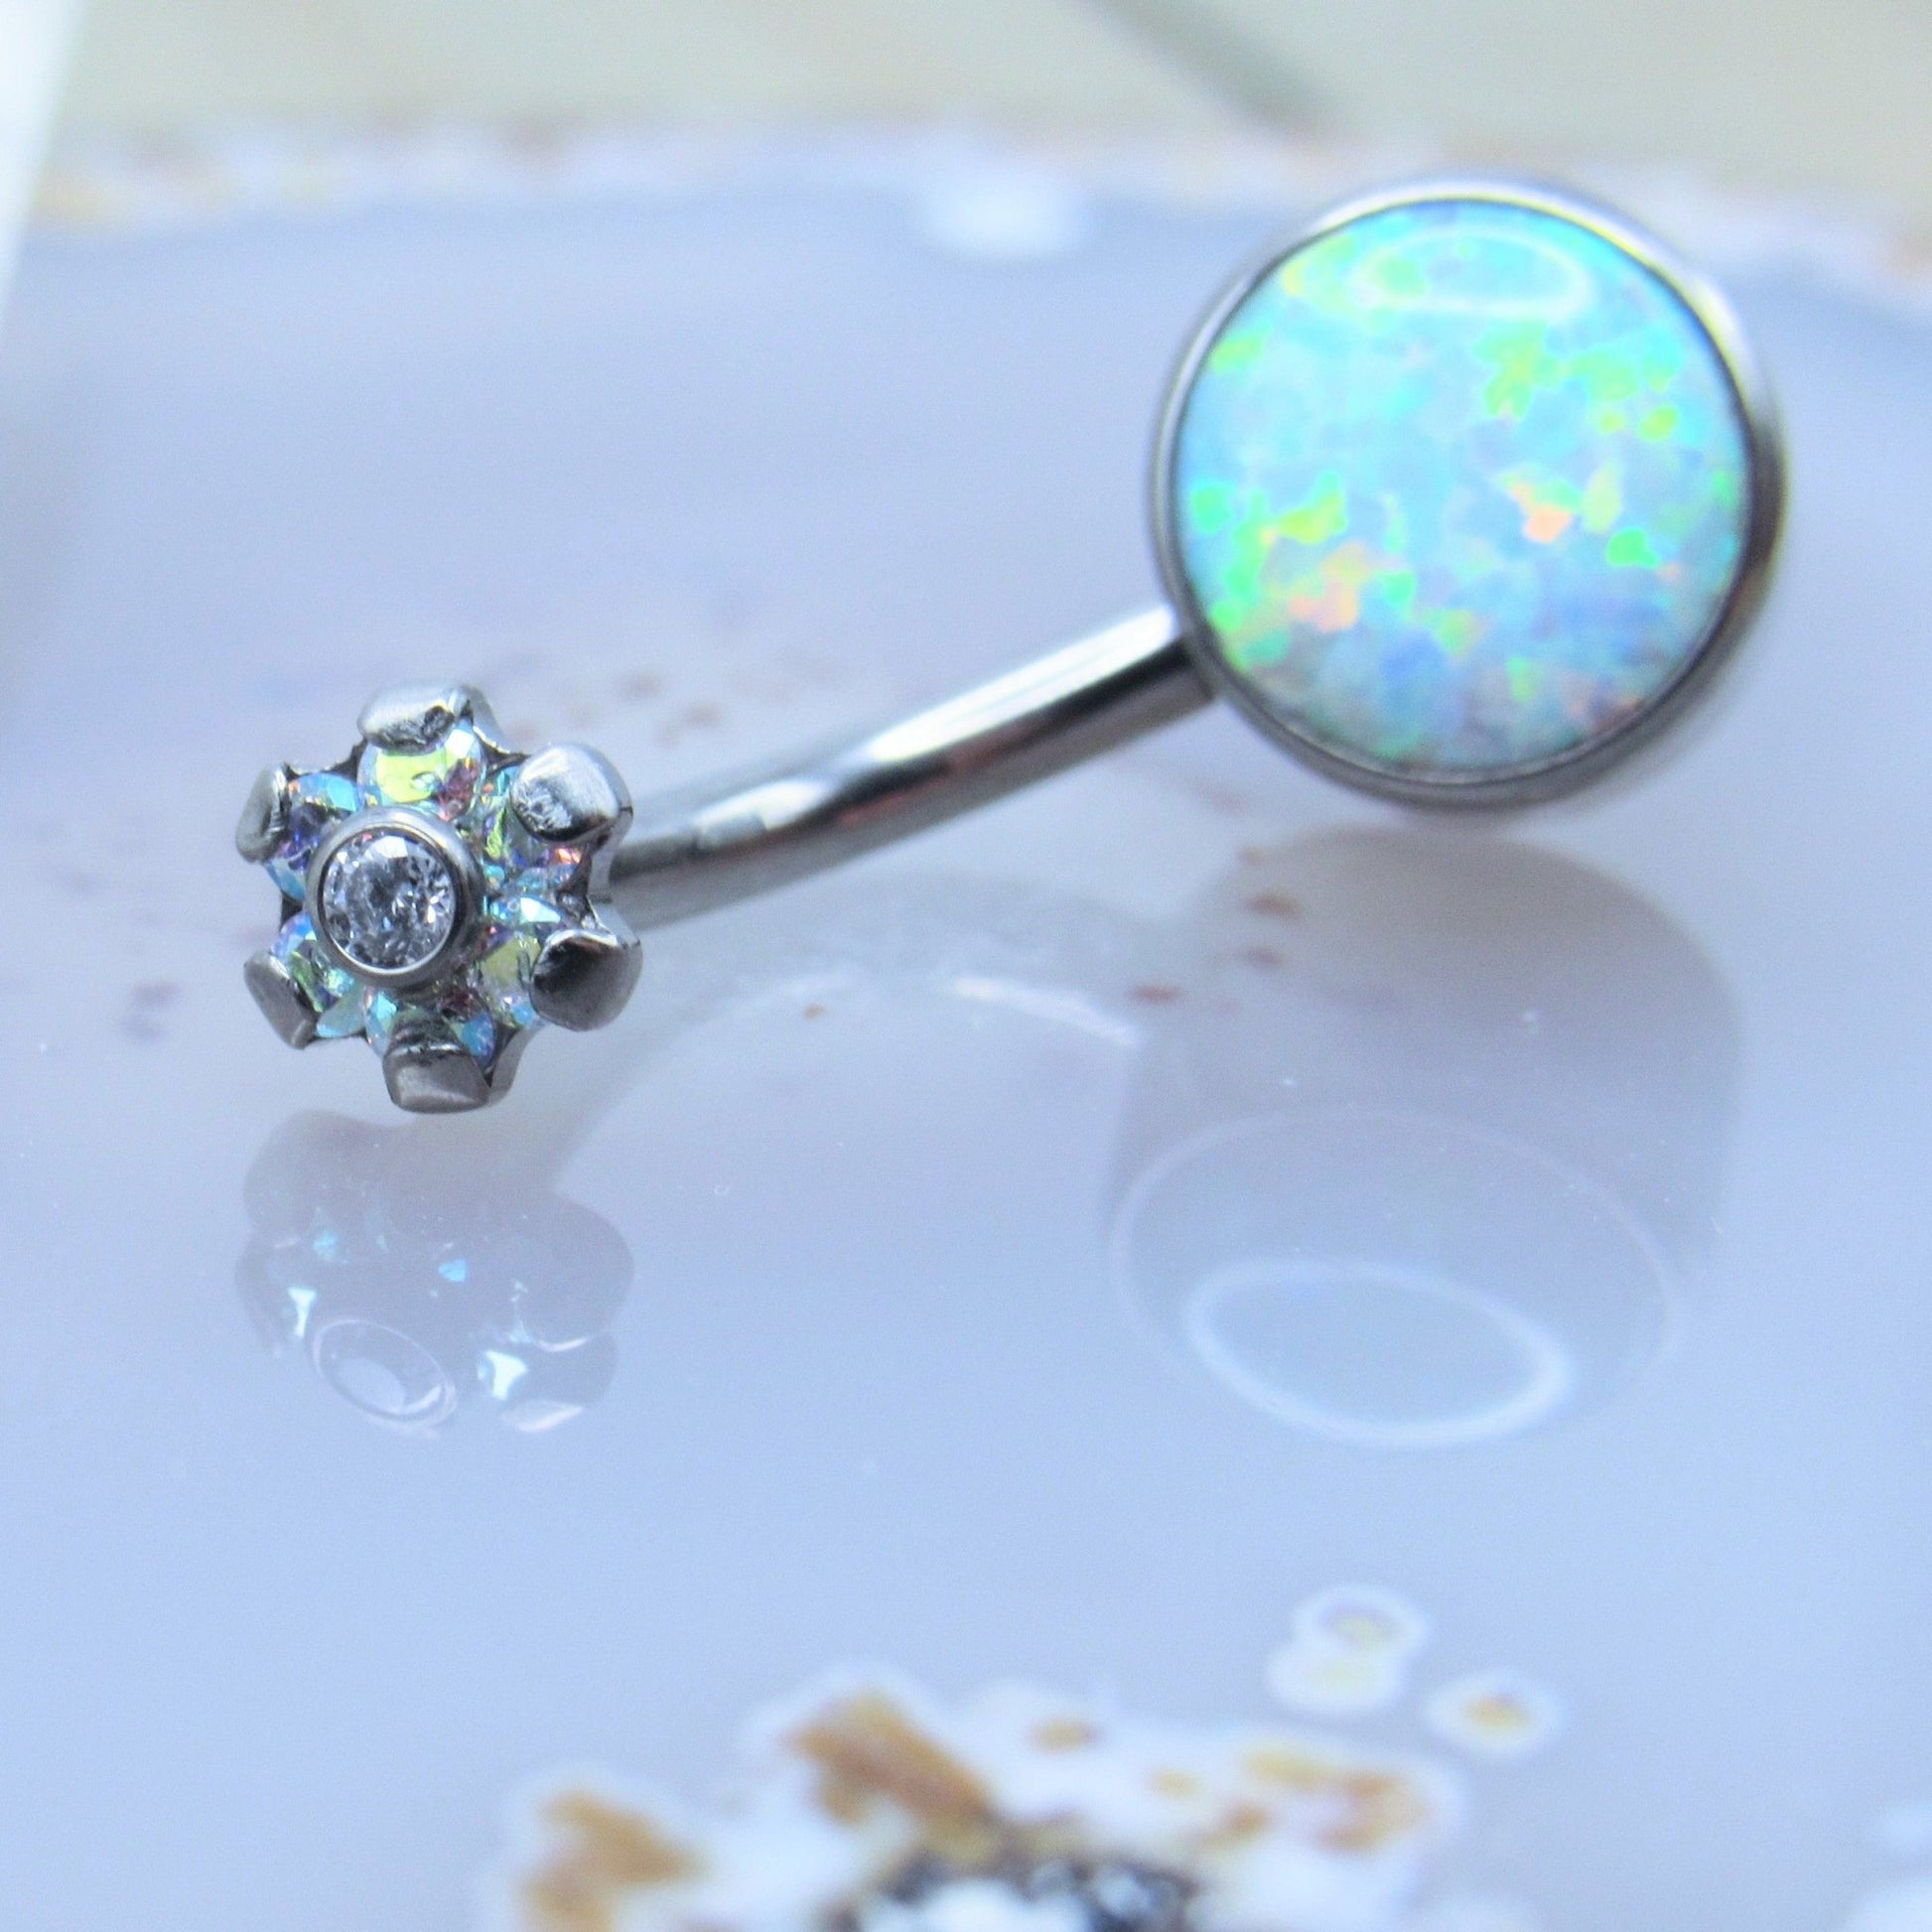 Flower gemstone white opal belly button piercing ring 14g 3/8" titanium internally threaded navel bar - Siren Body Jewelry